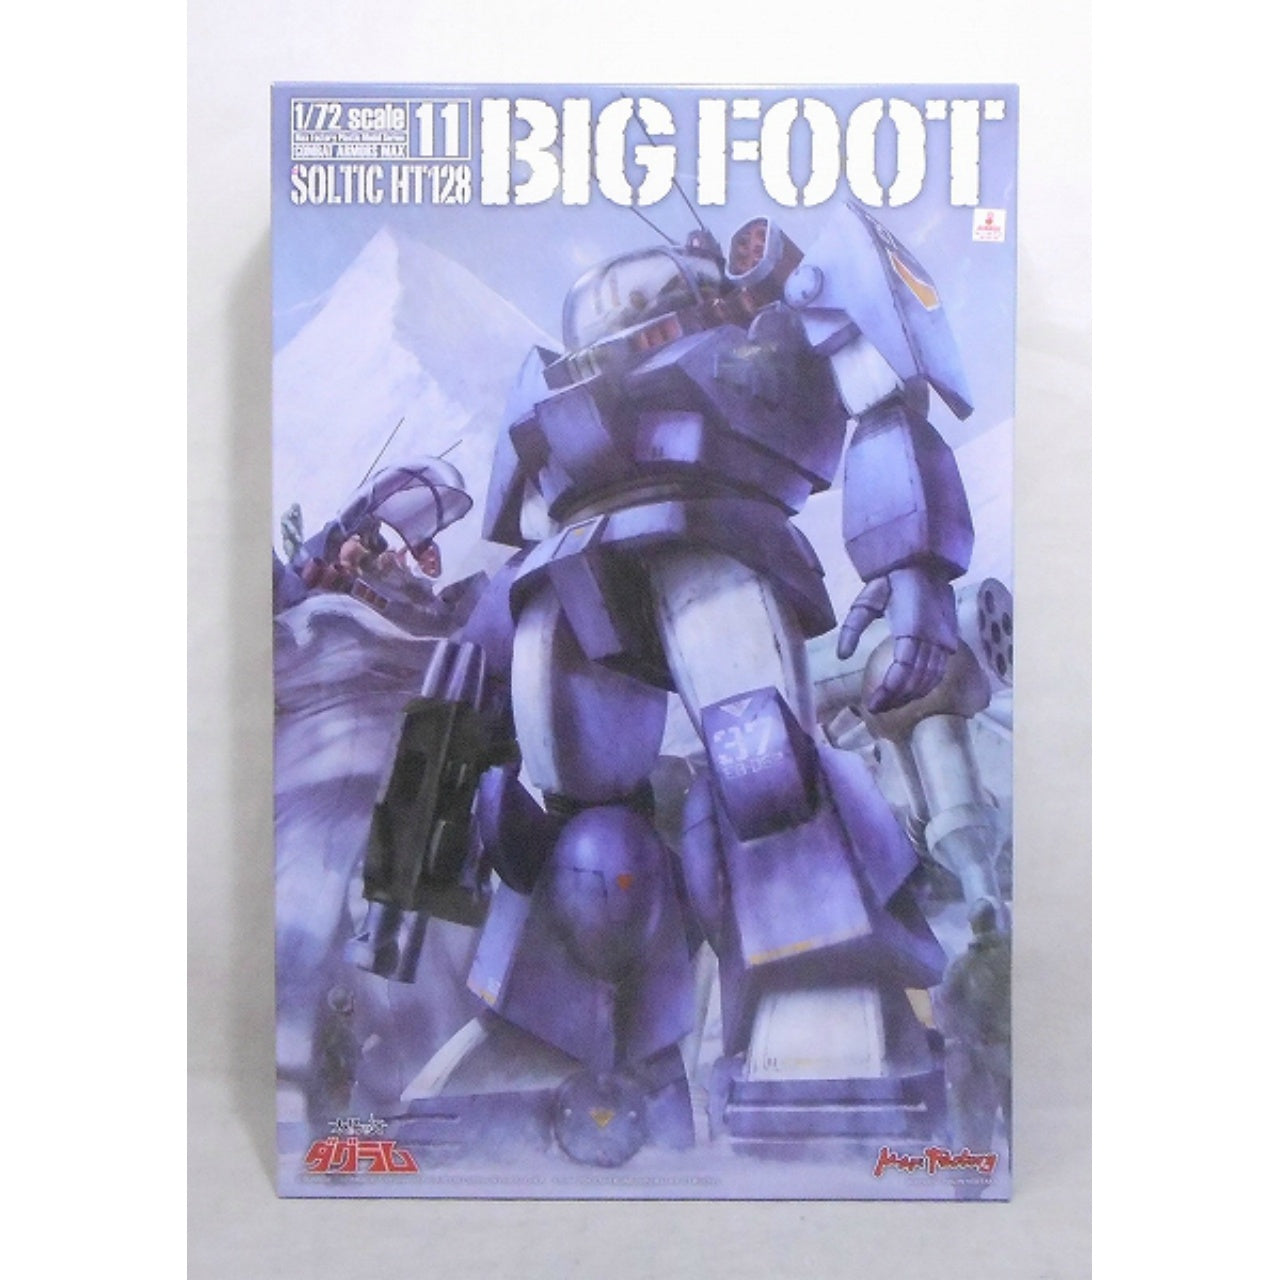 Fang of the Sun Dougram - COMBAT ARMORS MAX11 1/72 Soltic HT128 Big Foot Plastikmodell